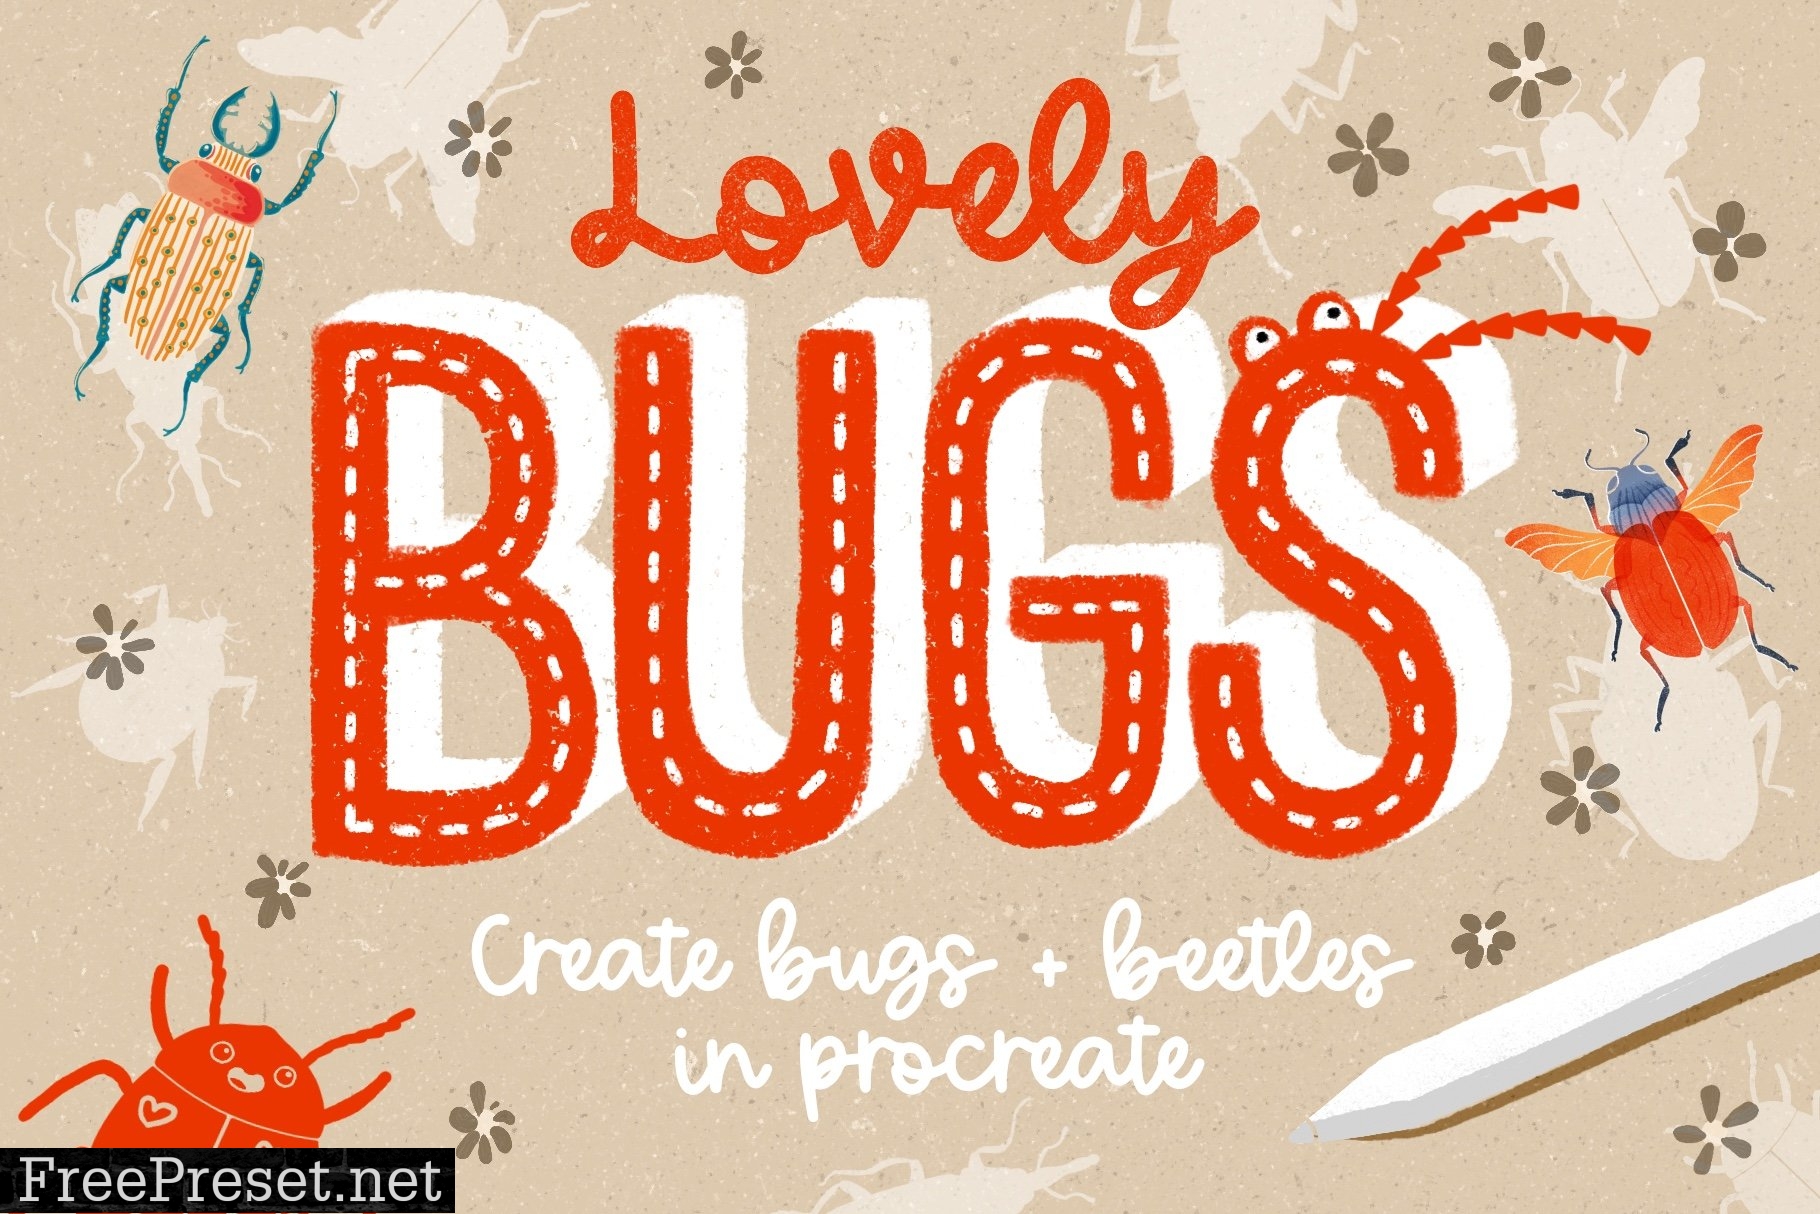 Lovely Bugs for Procreate 6176634